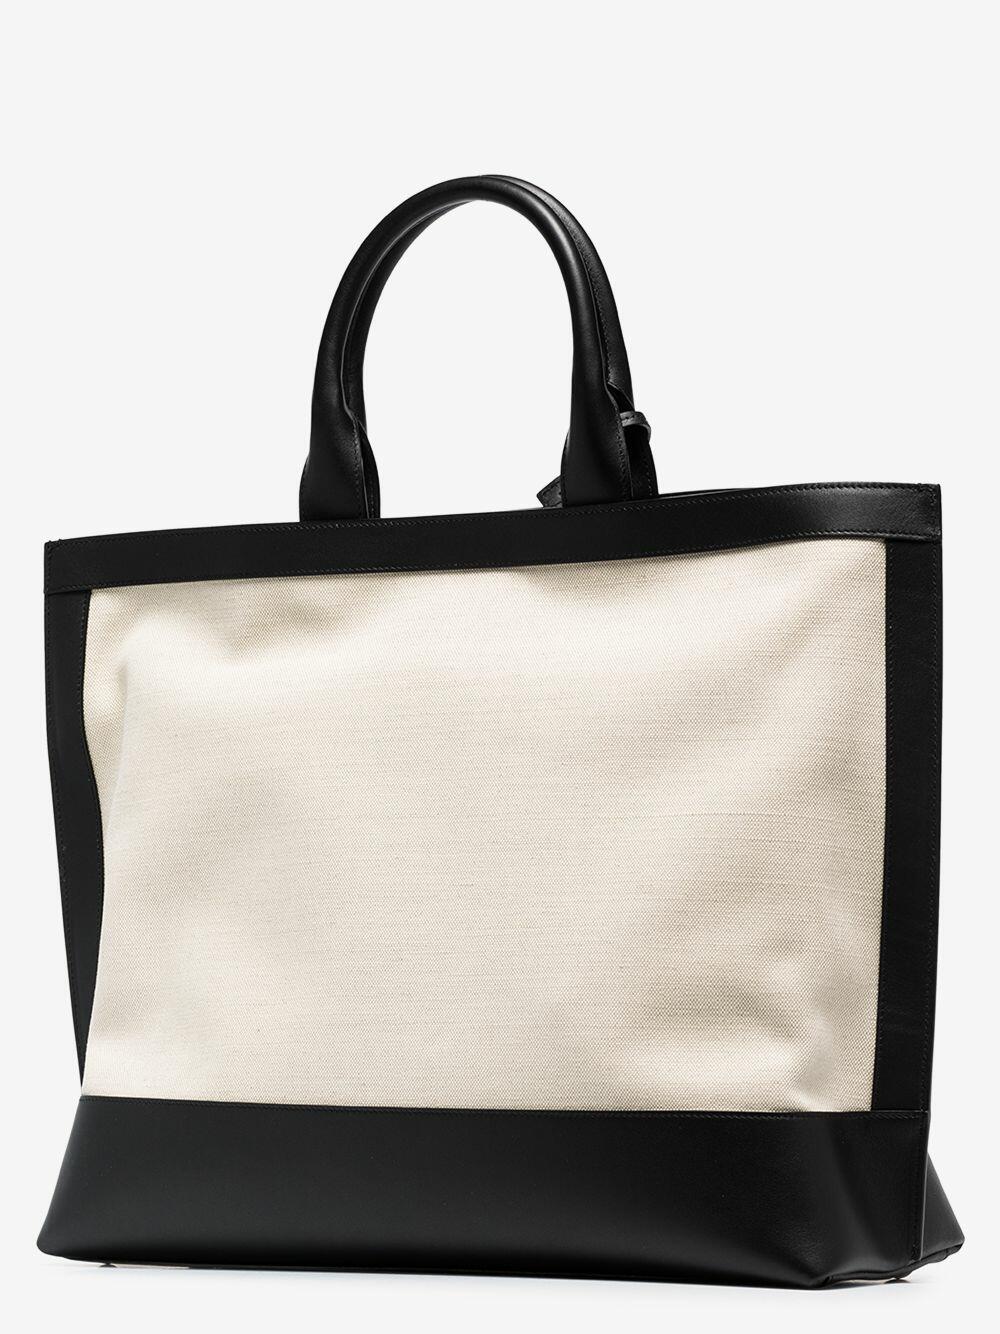 YSL Cabas Tote Bag Size Medium